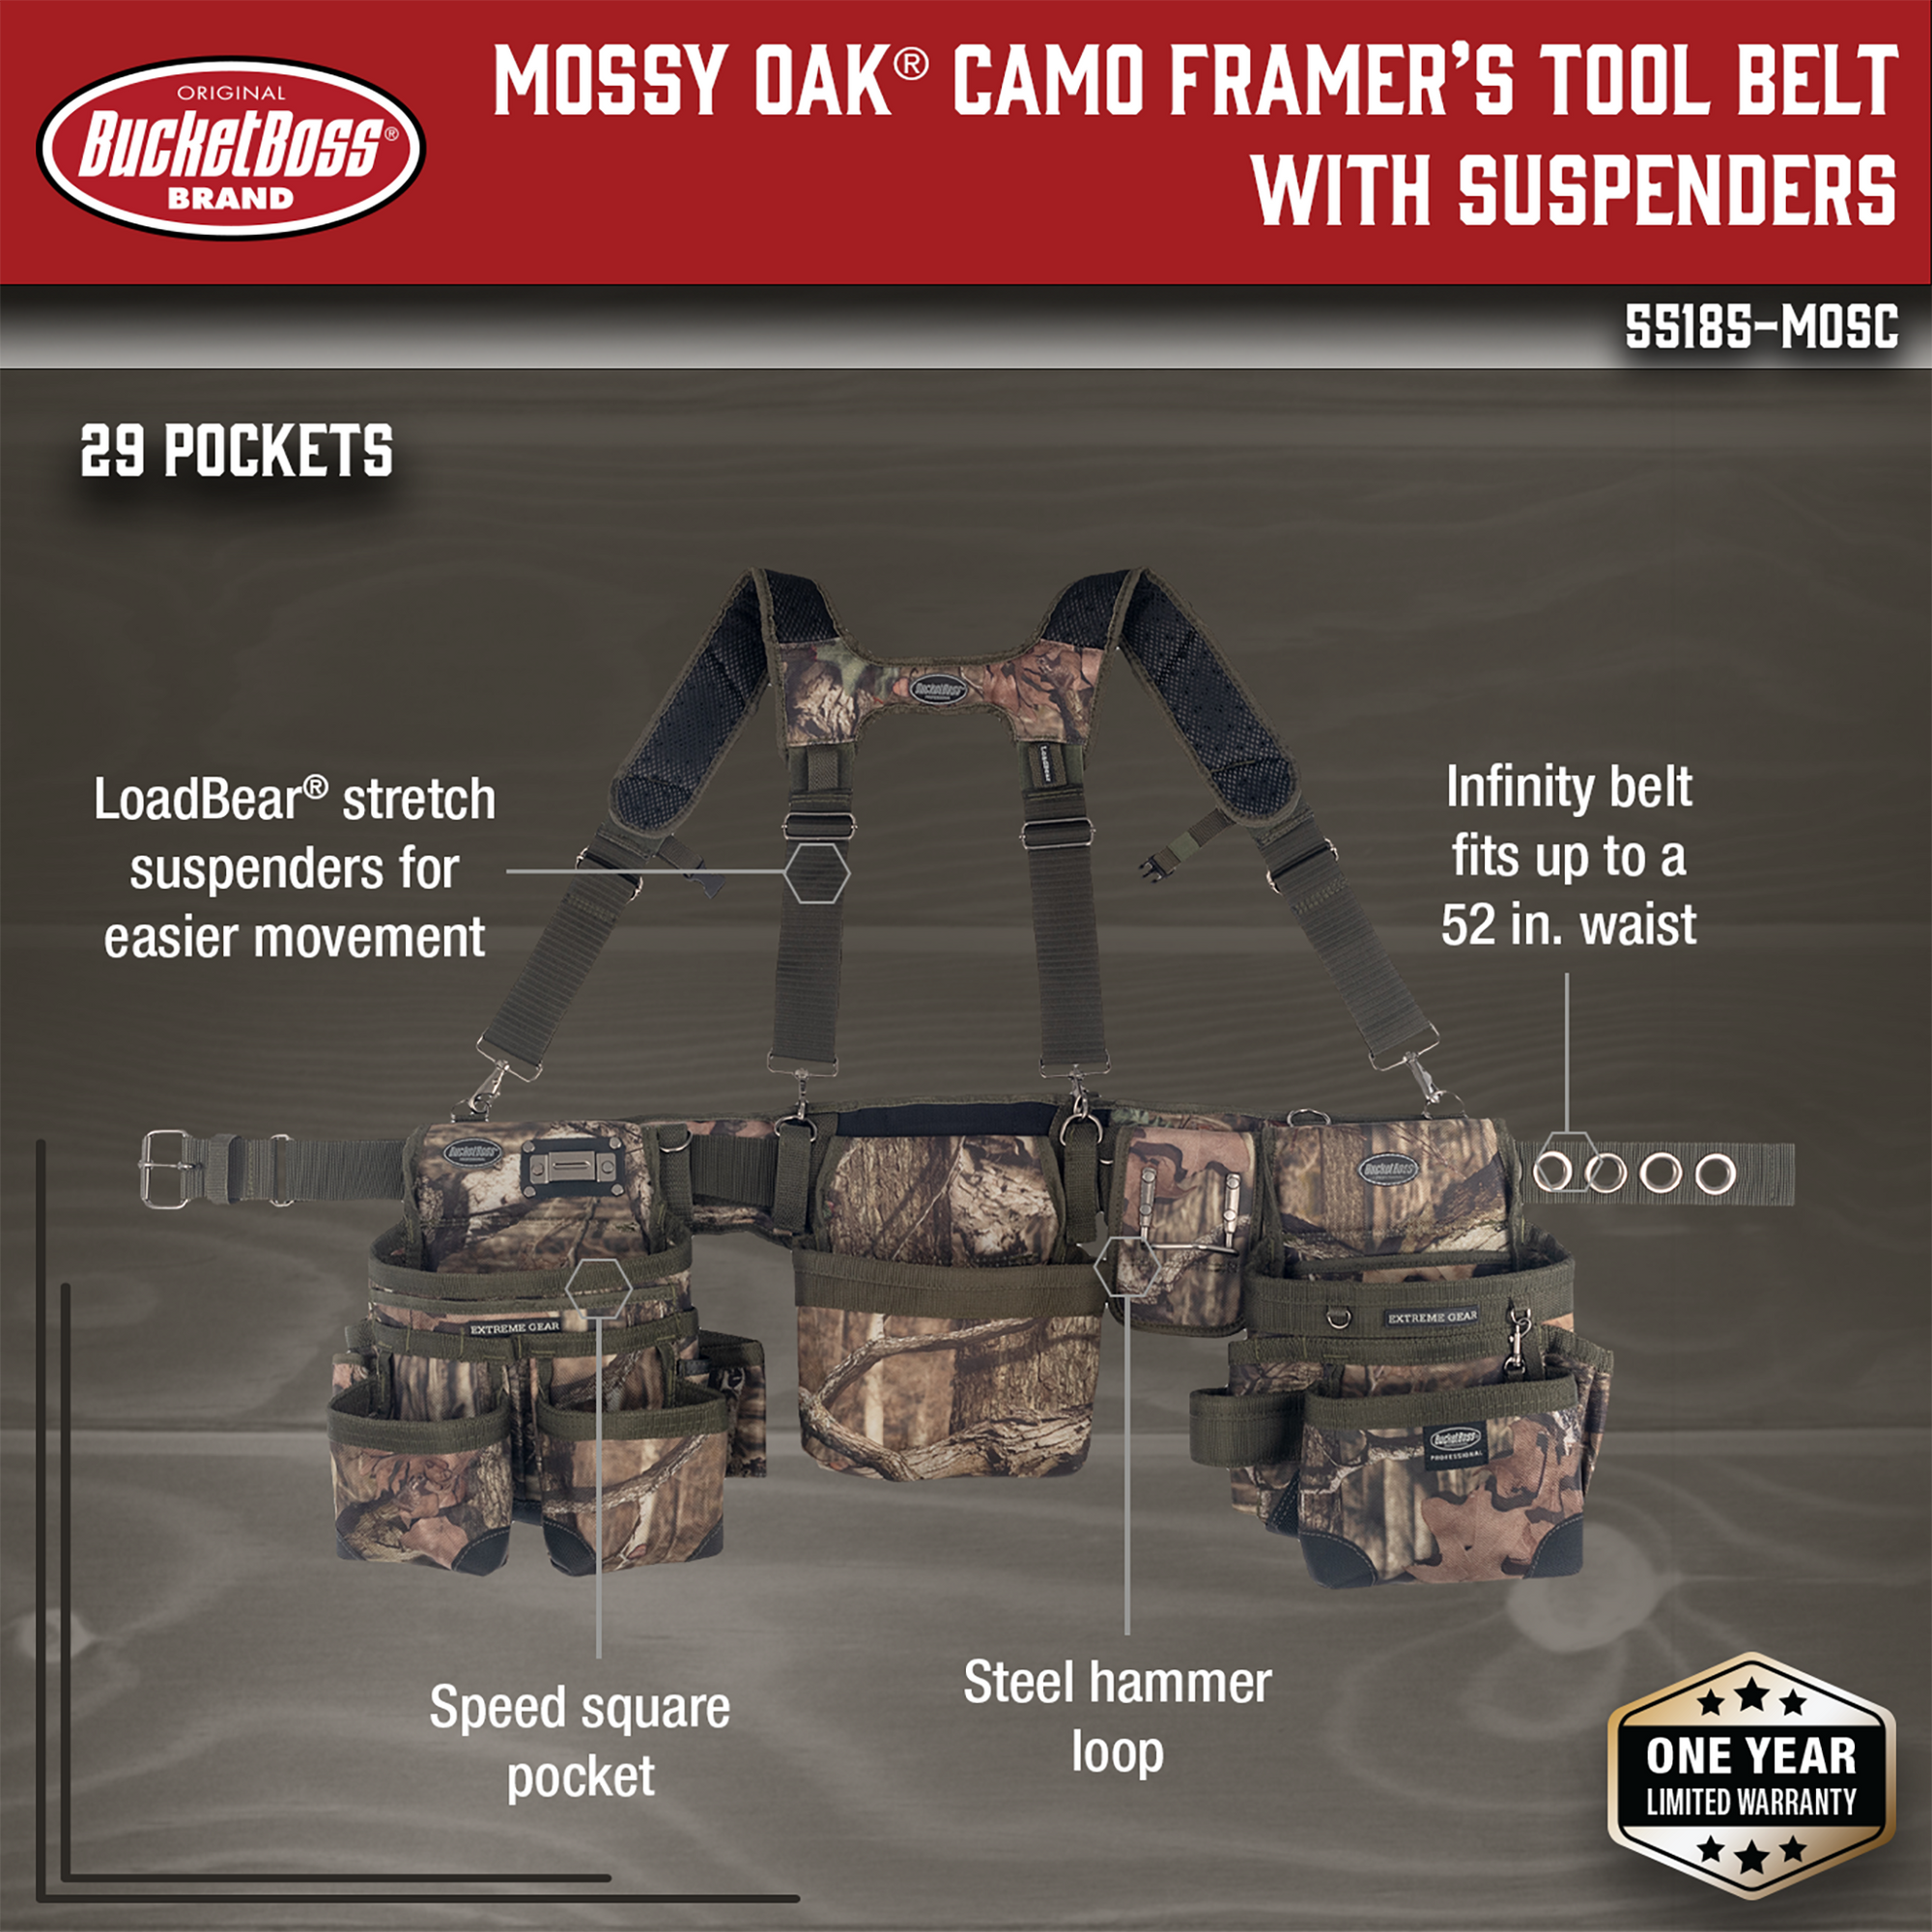 Mossy Oak® Camo Framer's Tool Belt with Suspenders